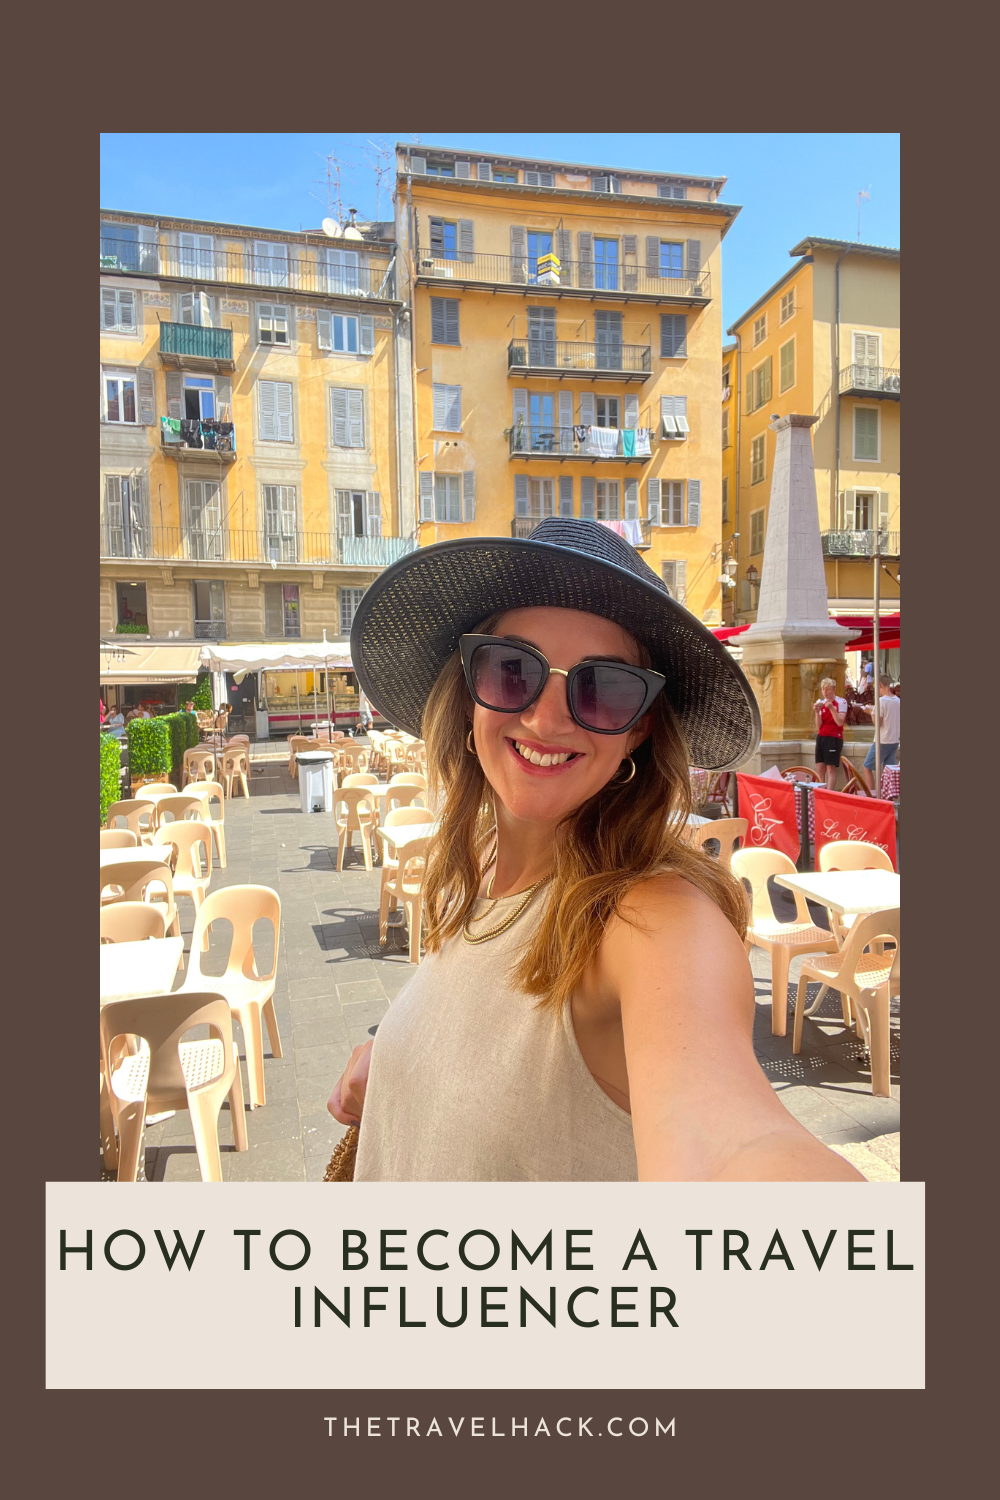 Becoming a travel influencer: 10 steps!